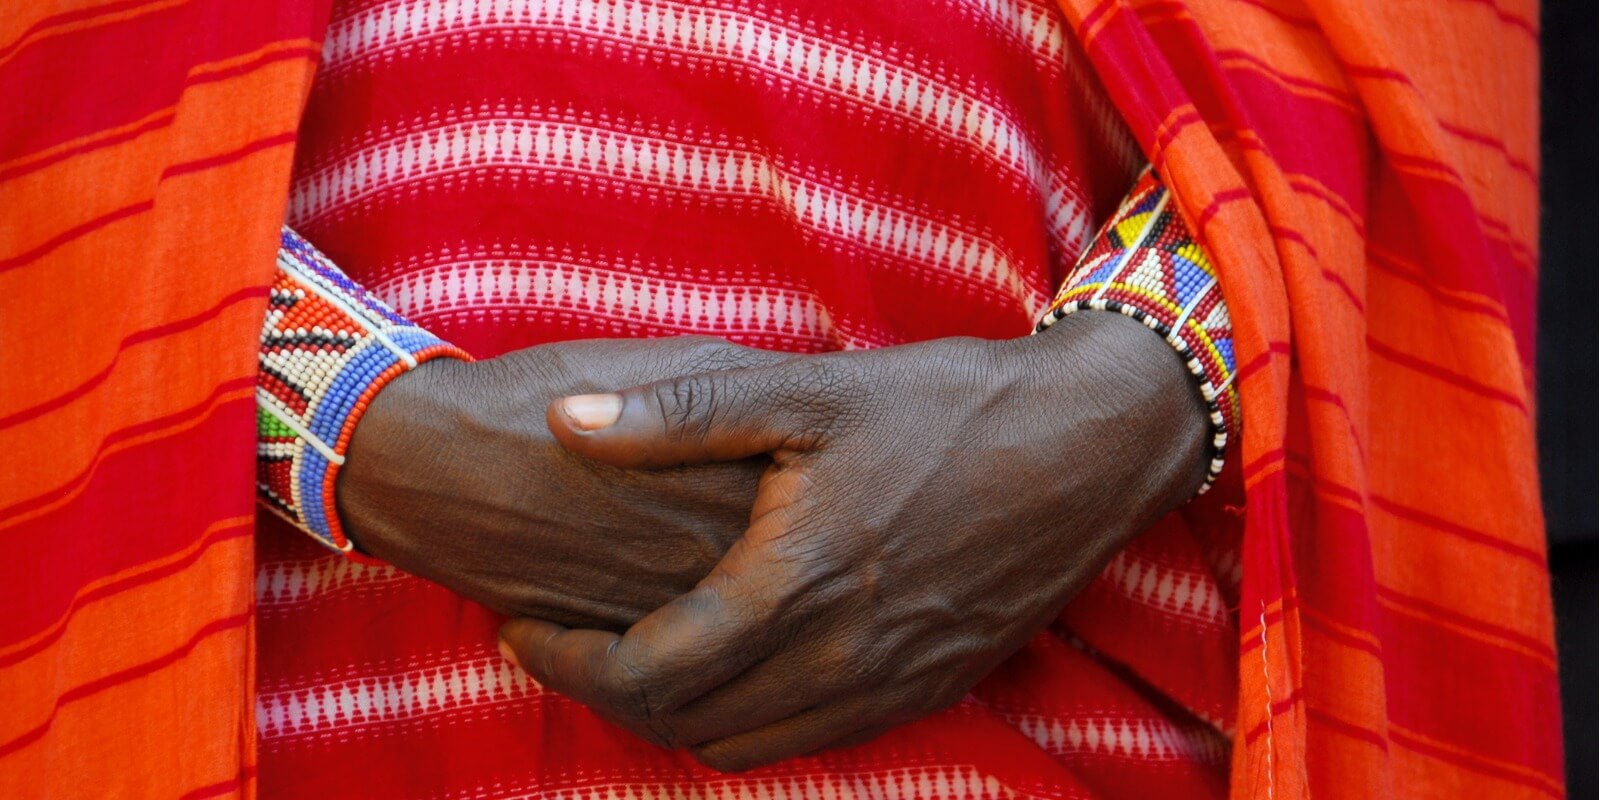 Masai woman with her jewelry, Kenya, Africa